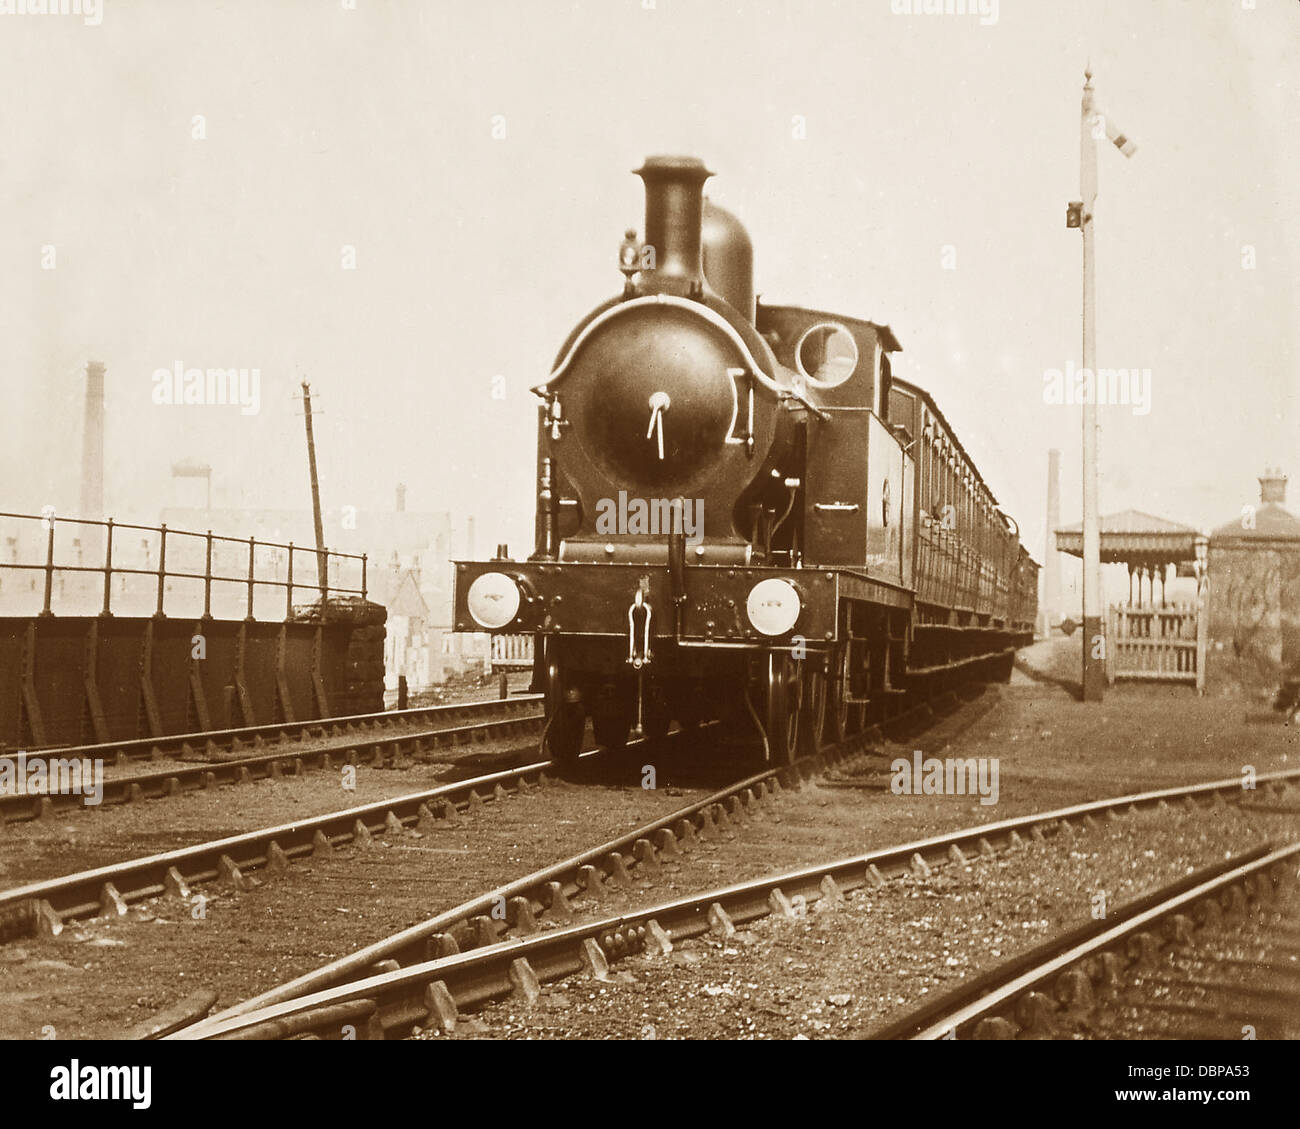 Padiham Treno a Vapore primi 1900s Foto Stock